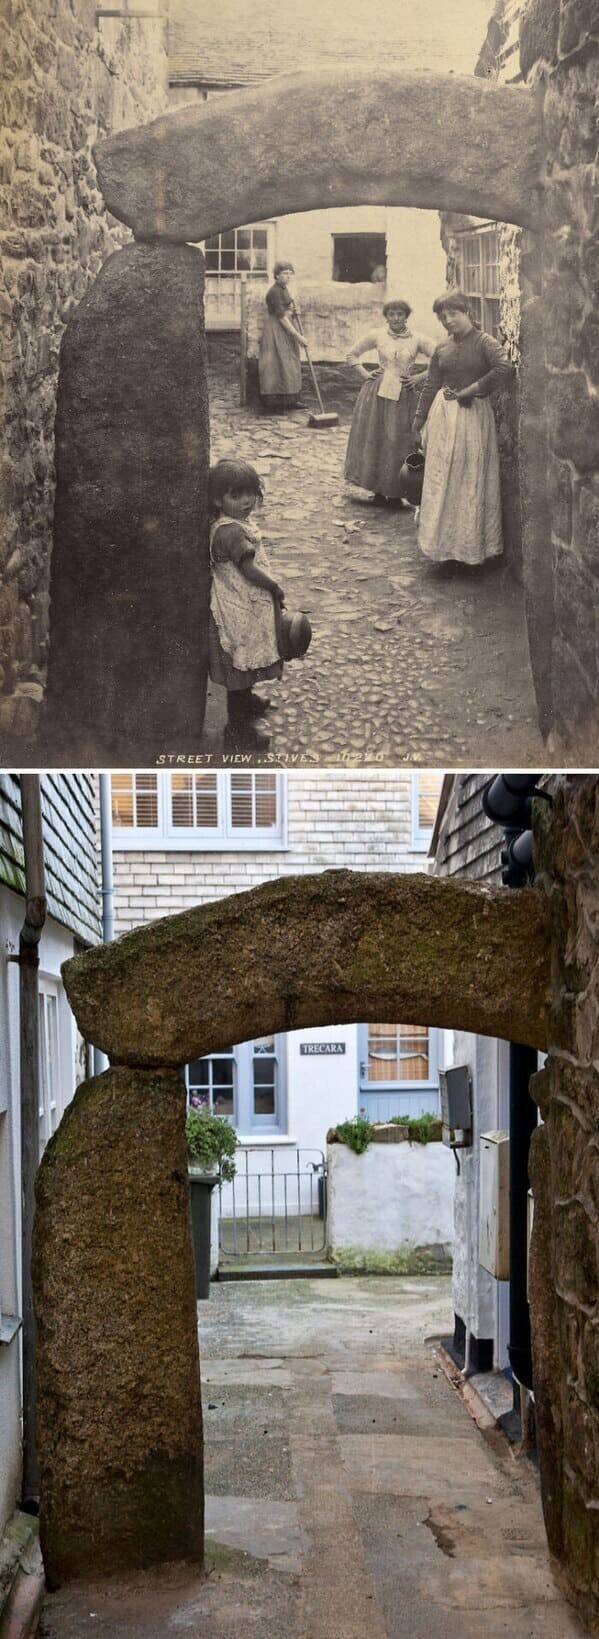 Хикс Корт, Сент-Айвс, Англия – 1888 год и сегодня